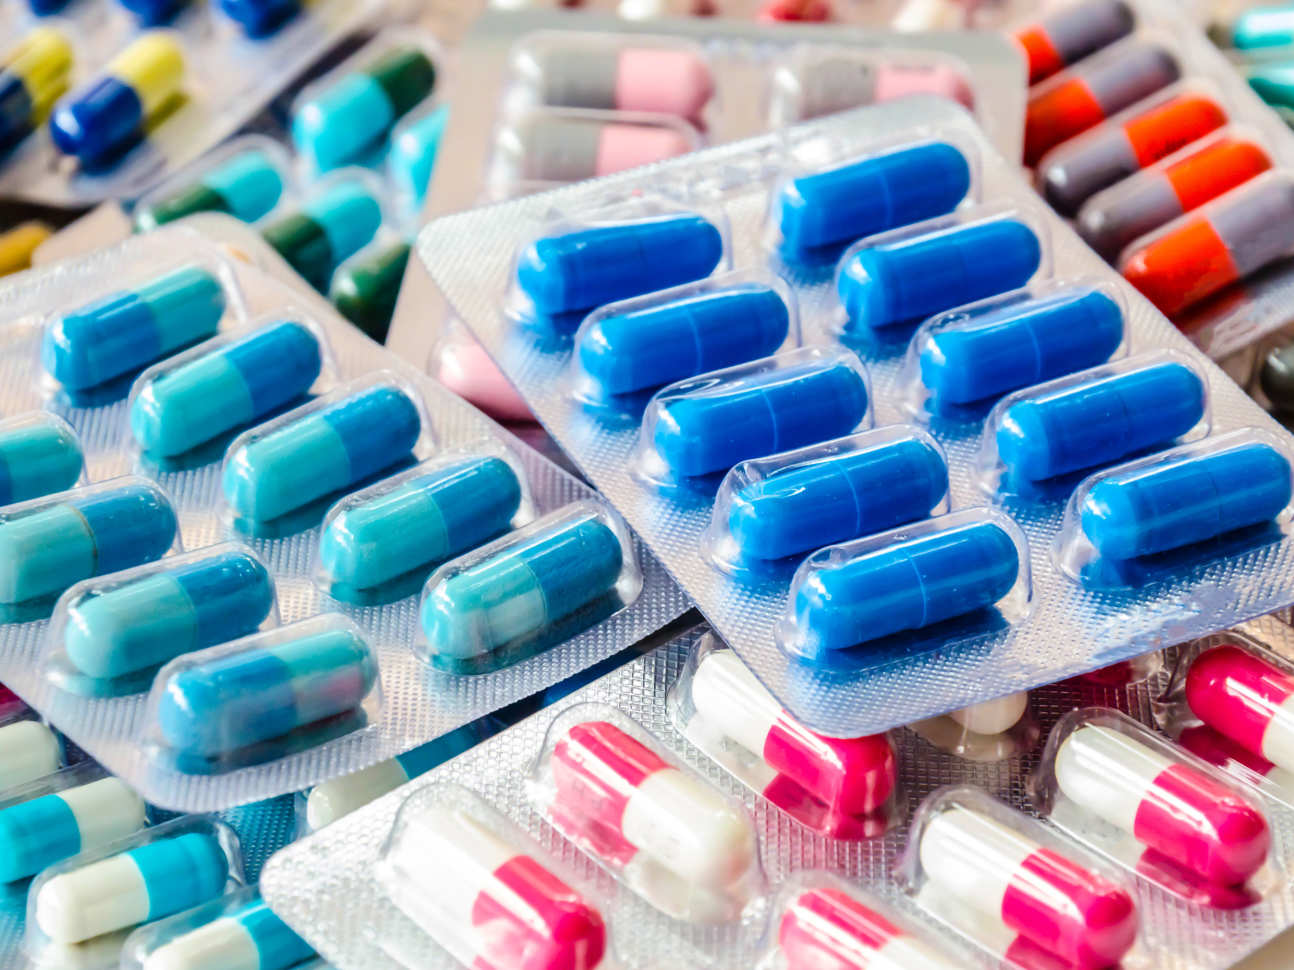 Antibiotic pills in a pack